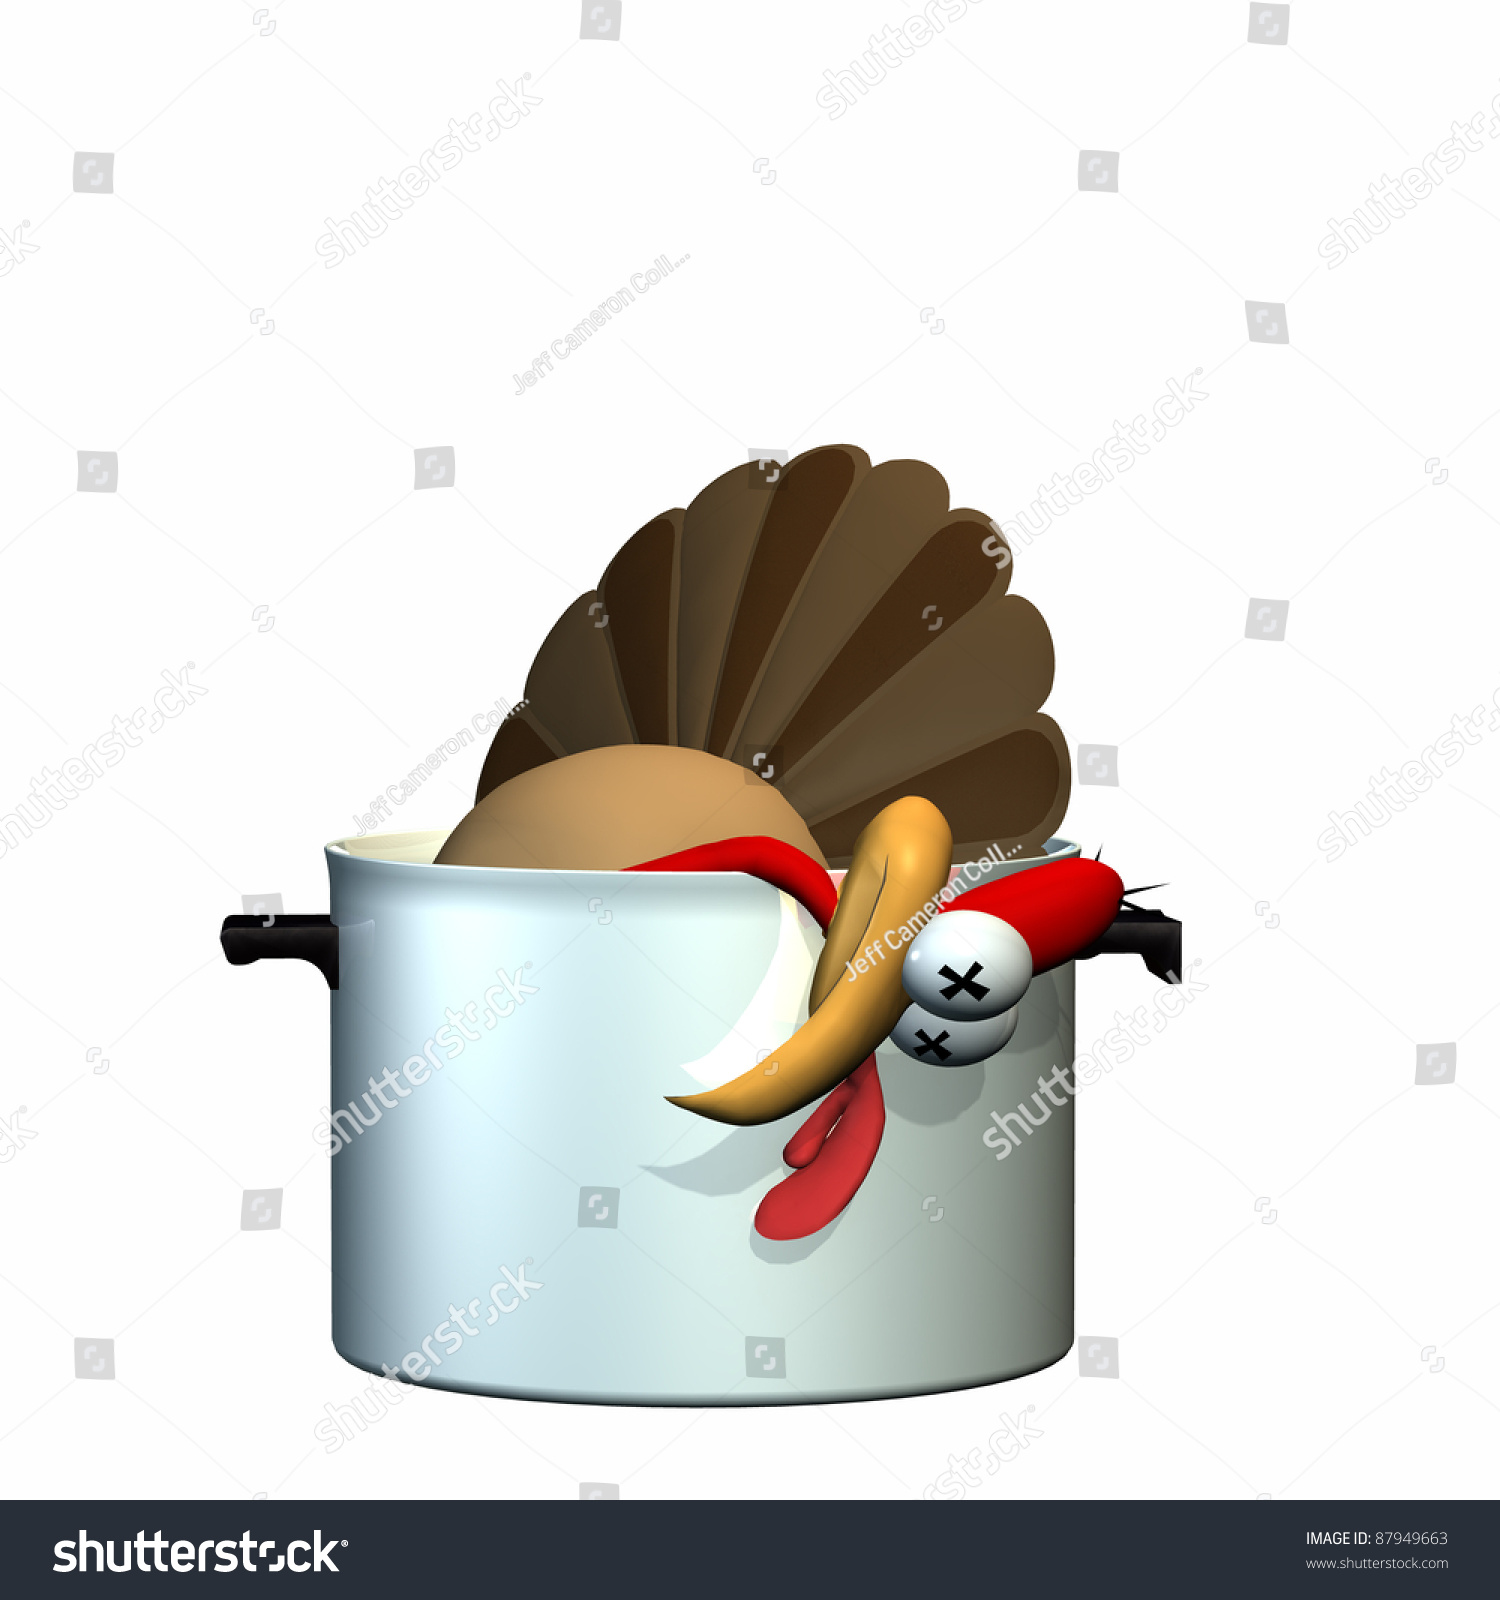 Making the web com. Clipart turkey dead